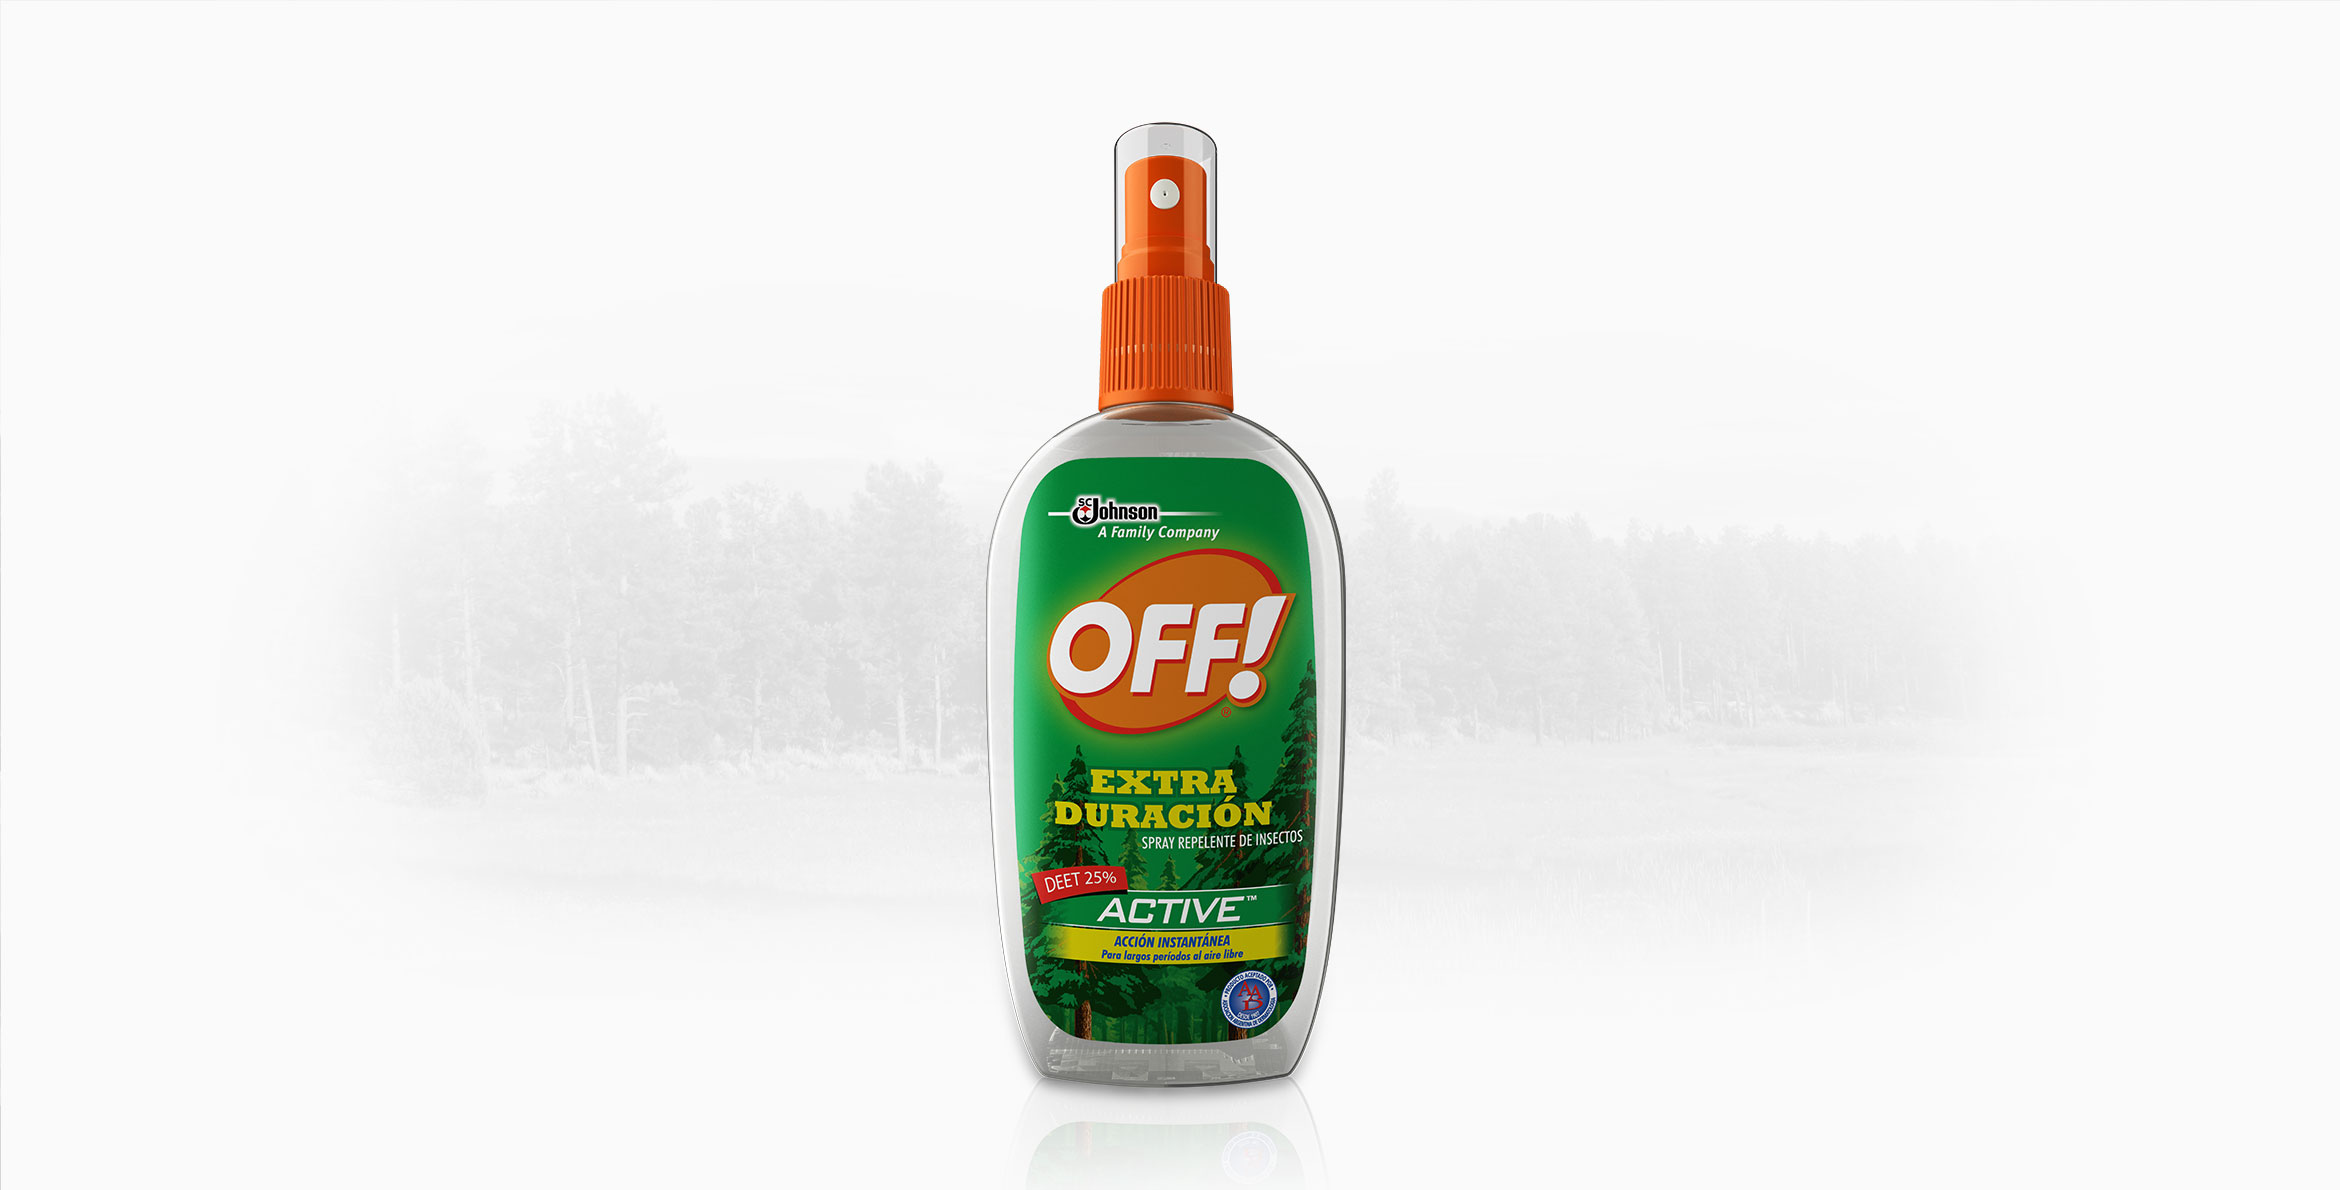 OFF!® Overtime Spray